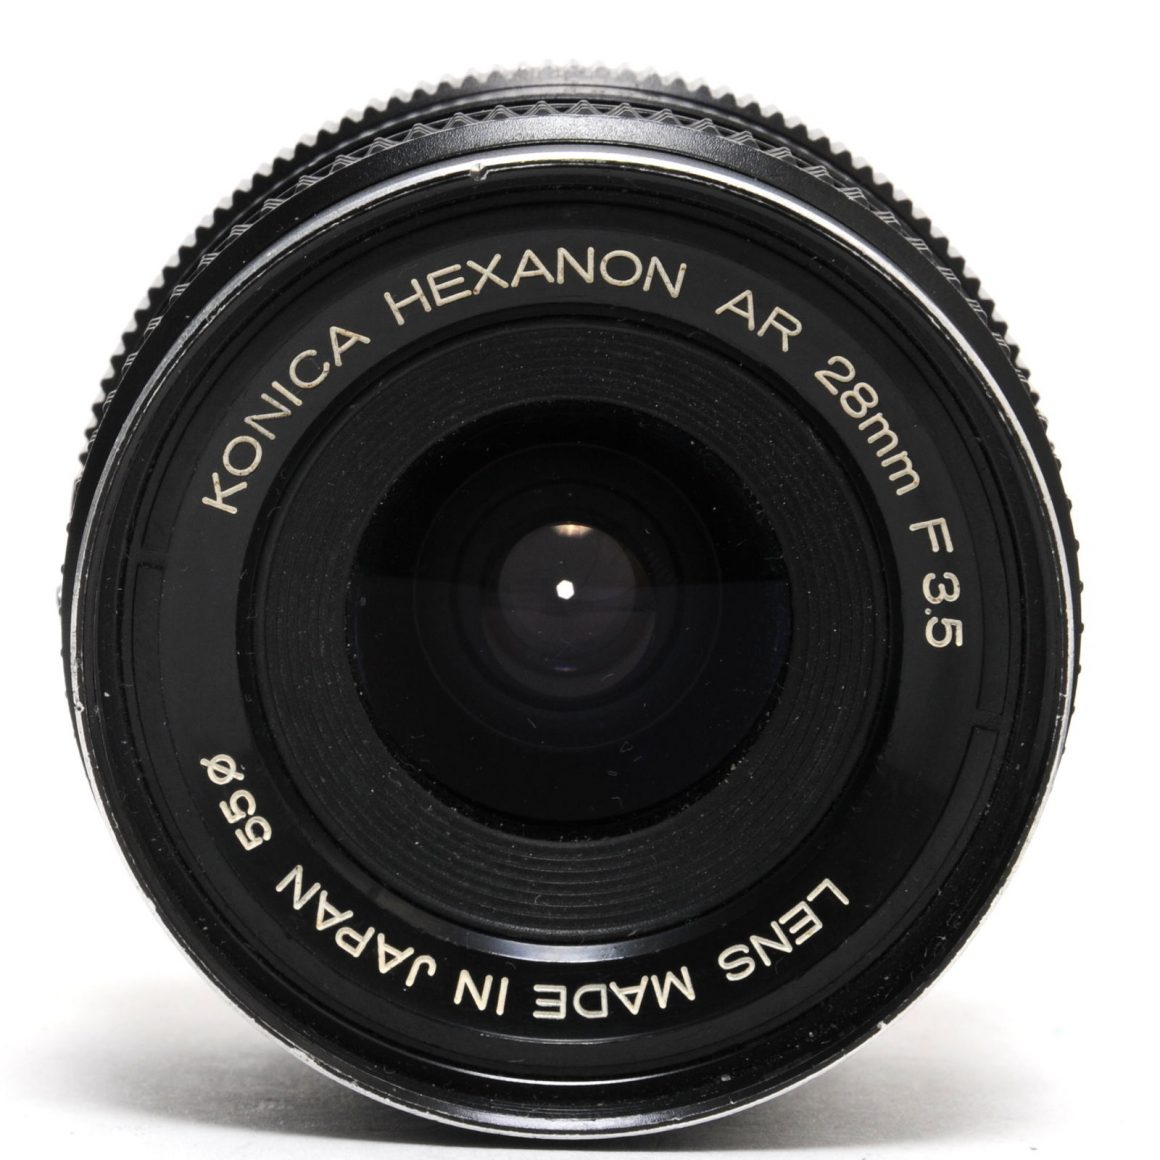 Konica HEXANON AR 28mm F/3.5